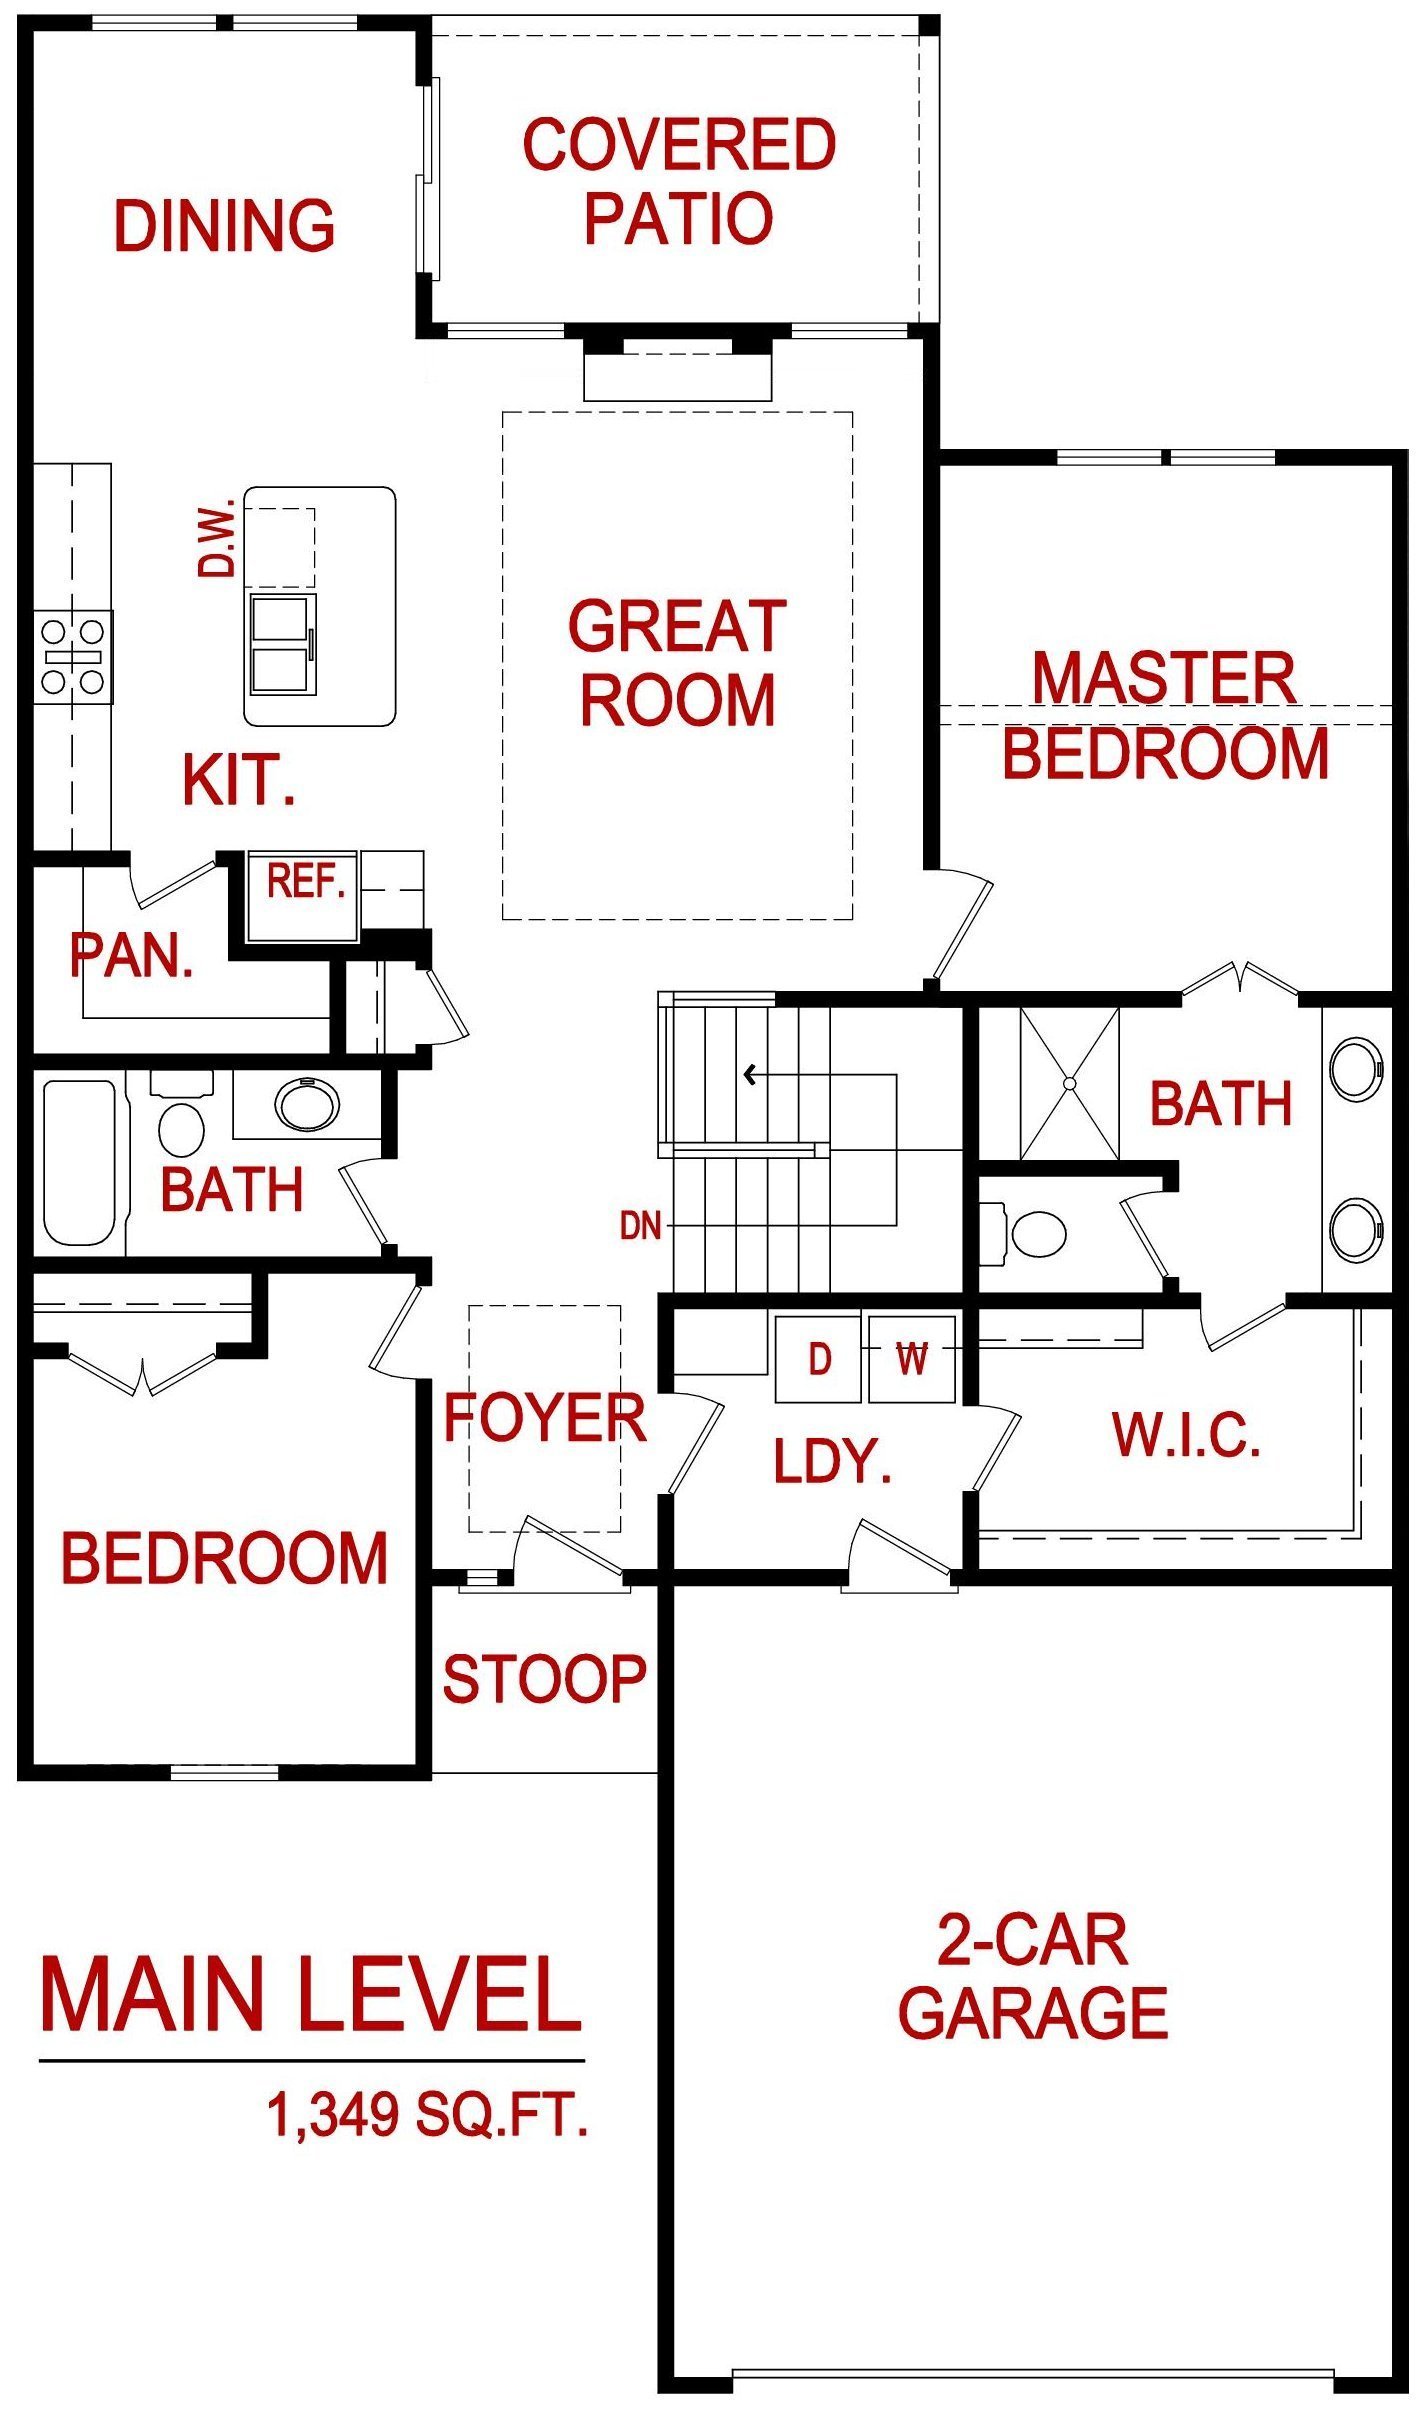 main level floor plan for 9540 Shady Bend Rd., Lenexa, KS from lambie homes